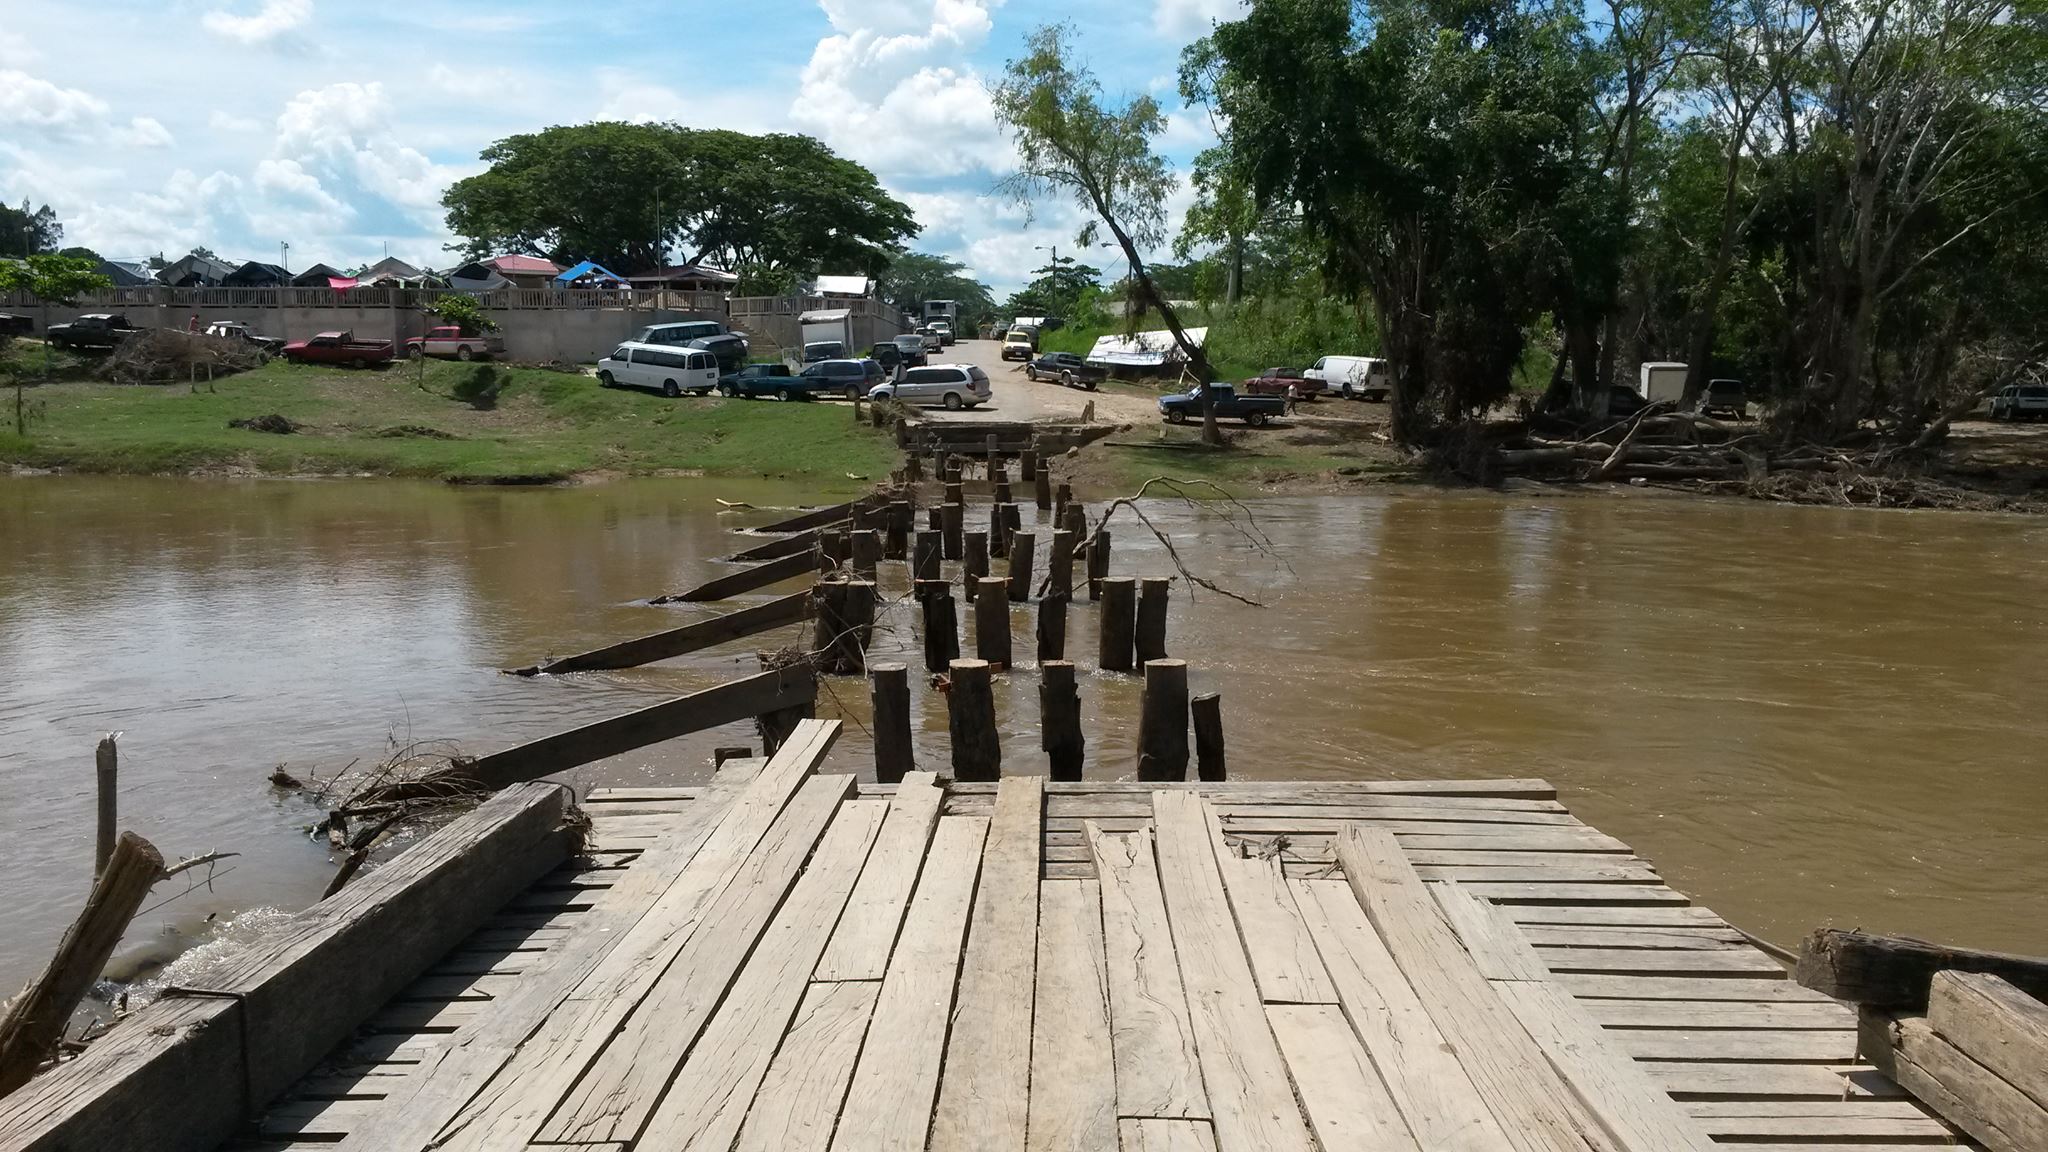 No sign of repairs yet of low lying wooden bridge in San Ignacio